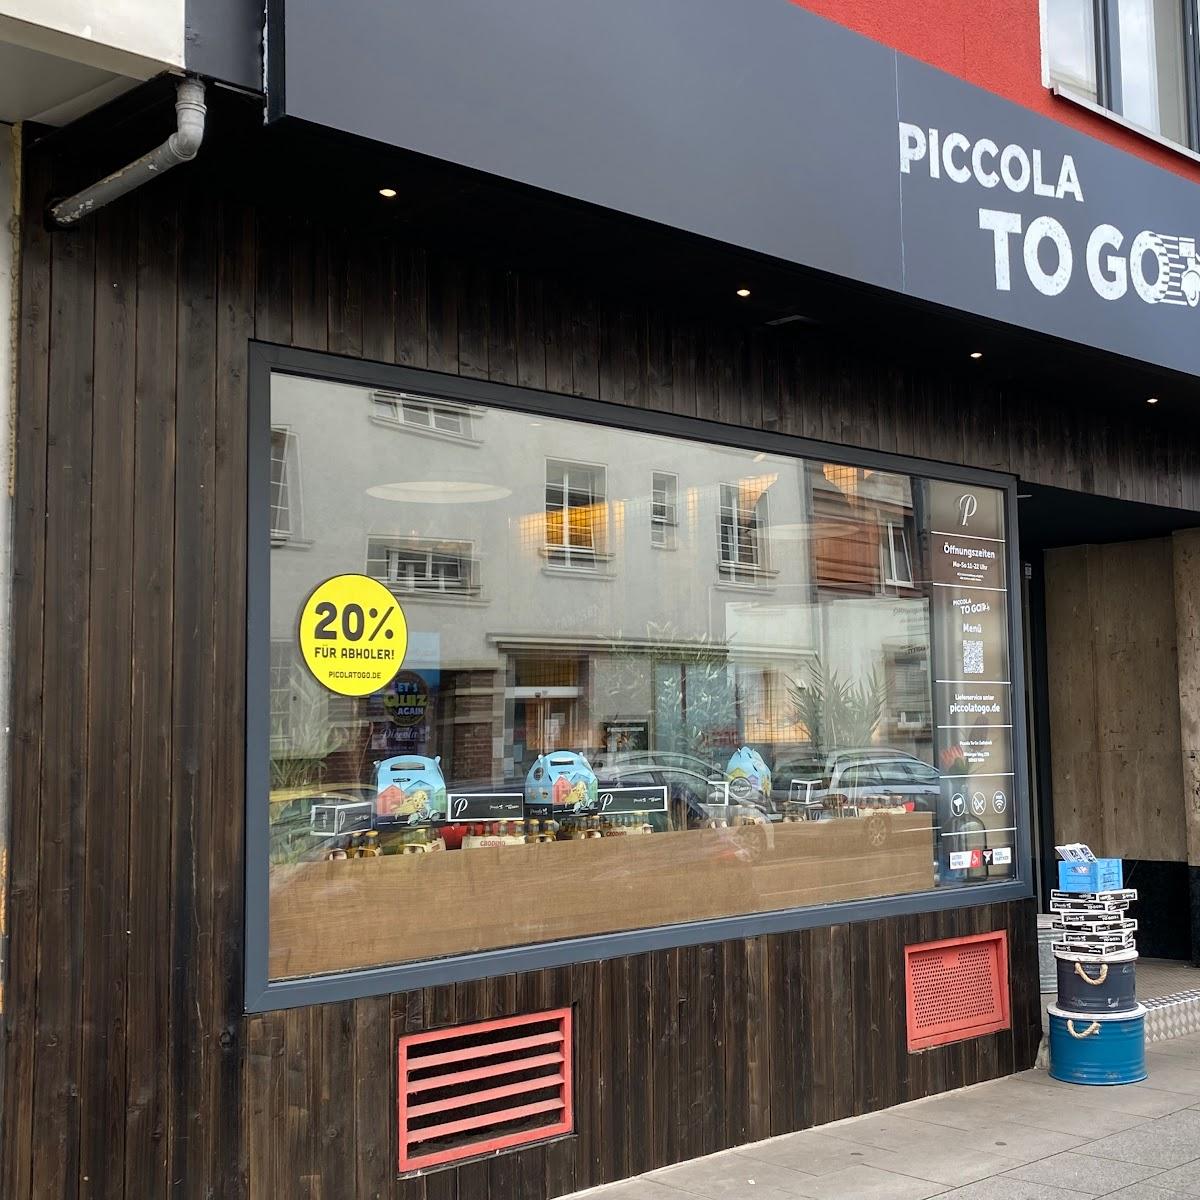 Restaurant "Pizzeria Piccola To Go Zollstock" in Köln